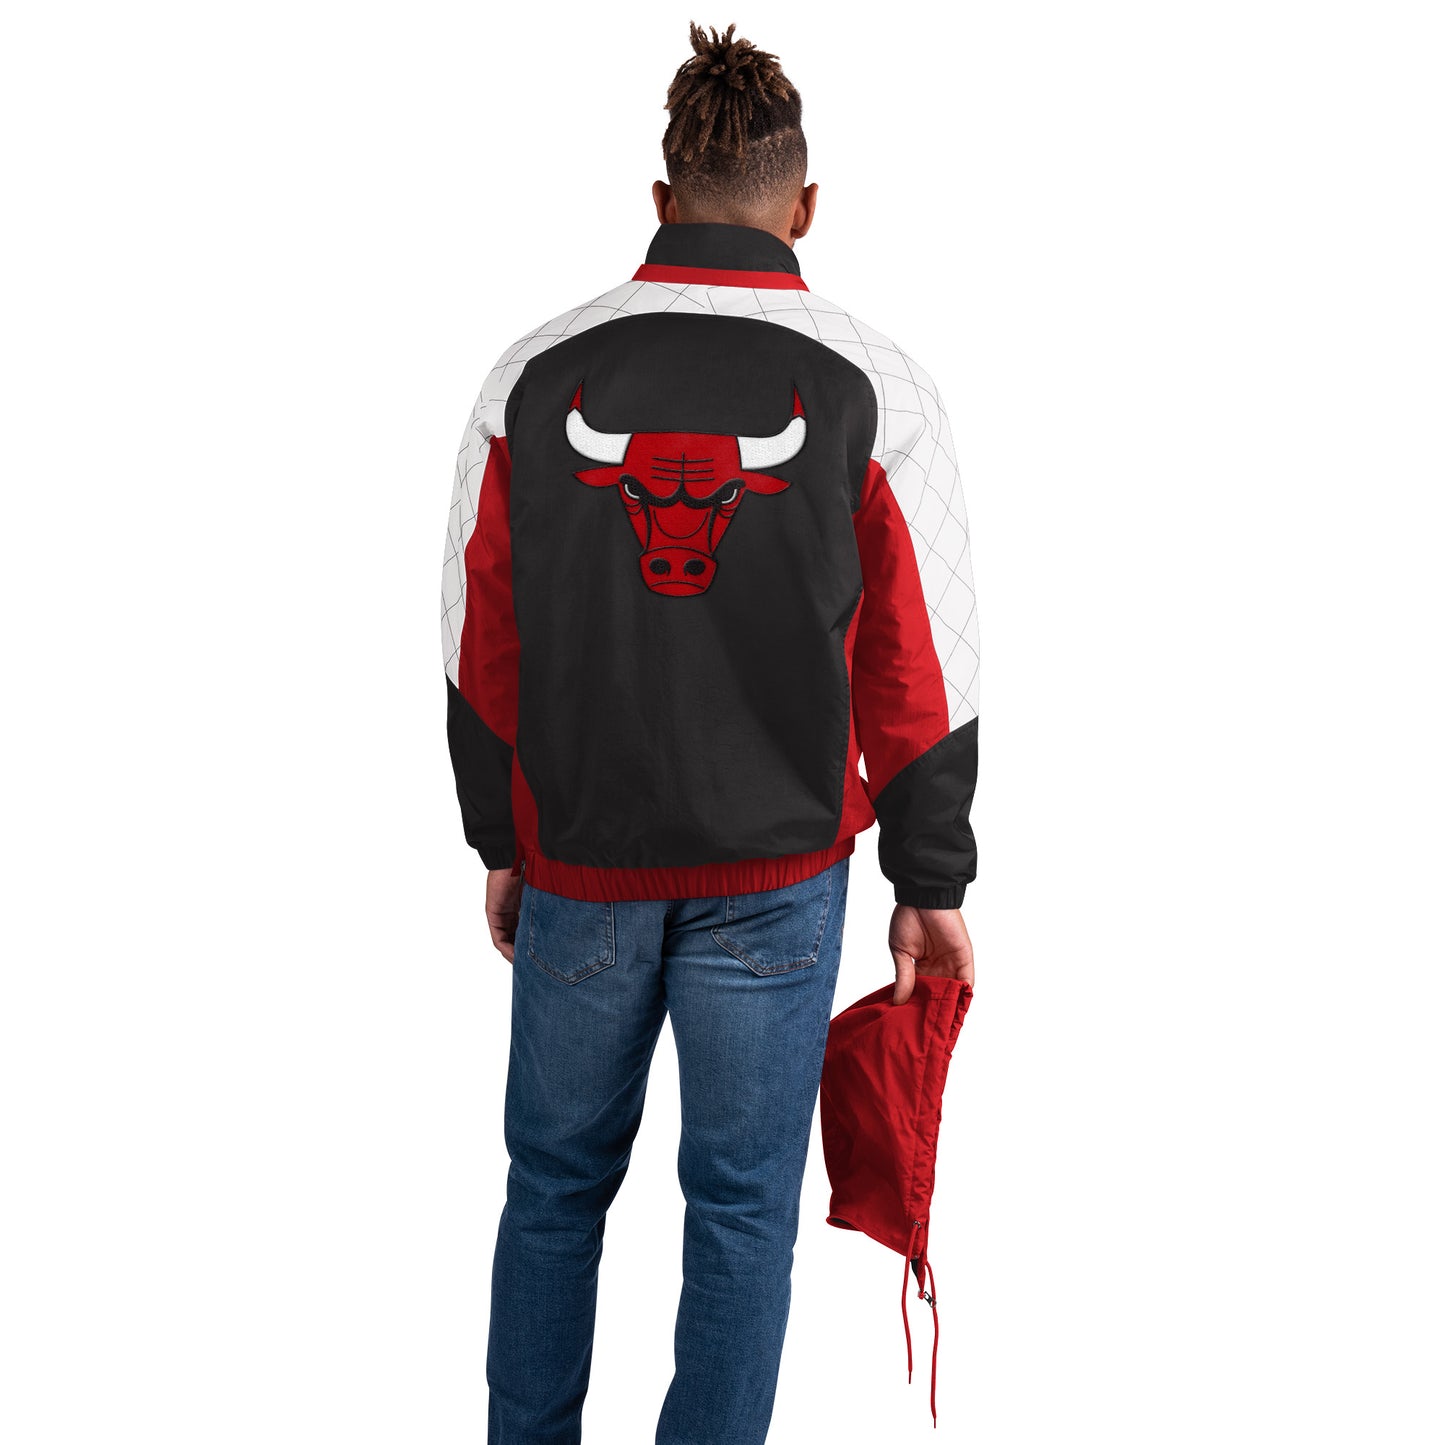 Chiacgo Bulls Starter Body Check 1/2 Zip Pullover Men's Jacket